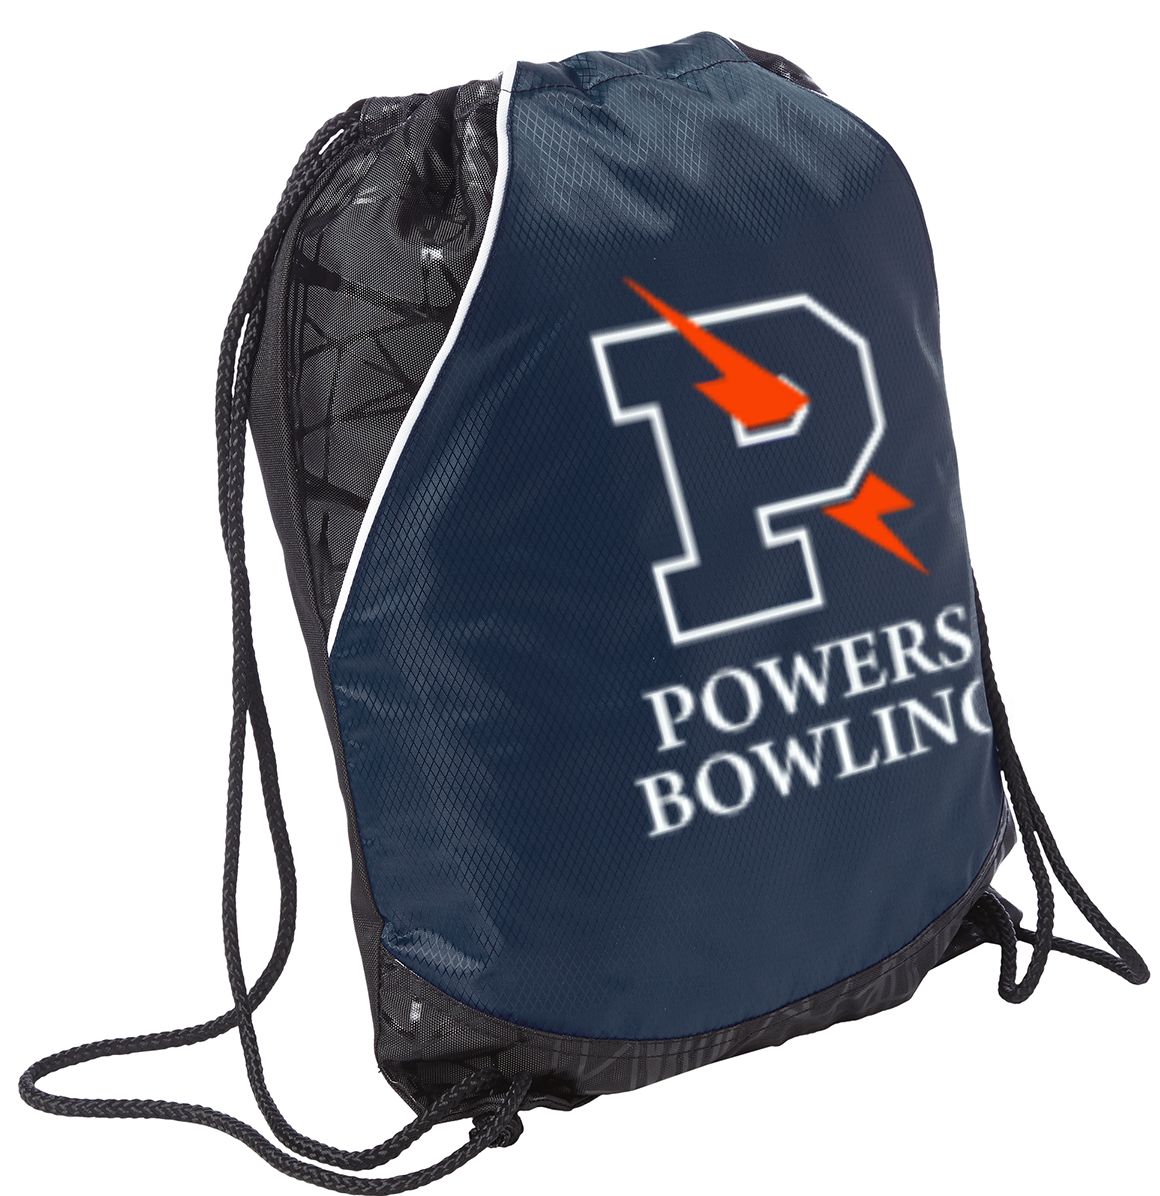 Powers Bowling Sport-Tek® Rival Cinch Pack